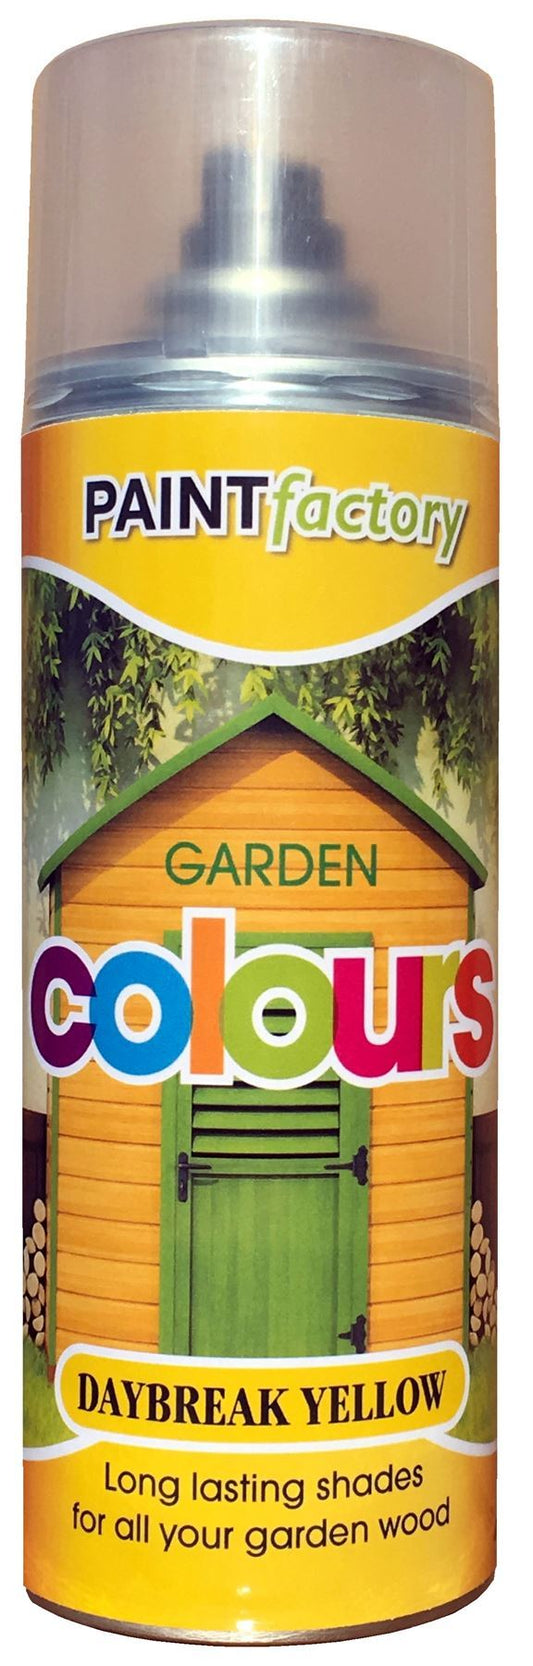 Paint Factory - Garden Colours Daybreak Yellow 400ml Spray Paints | Snape & Sons